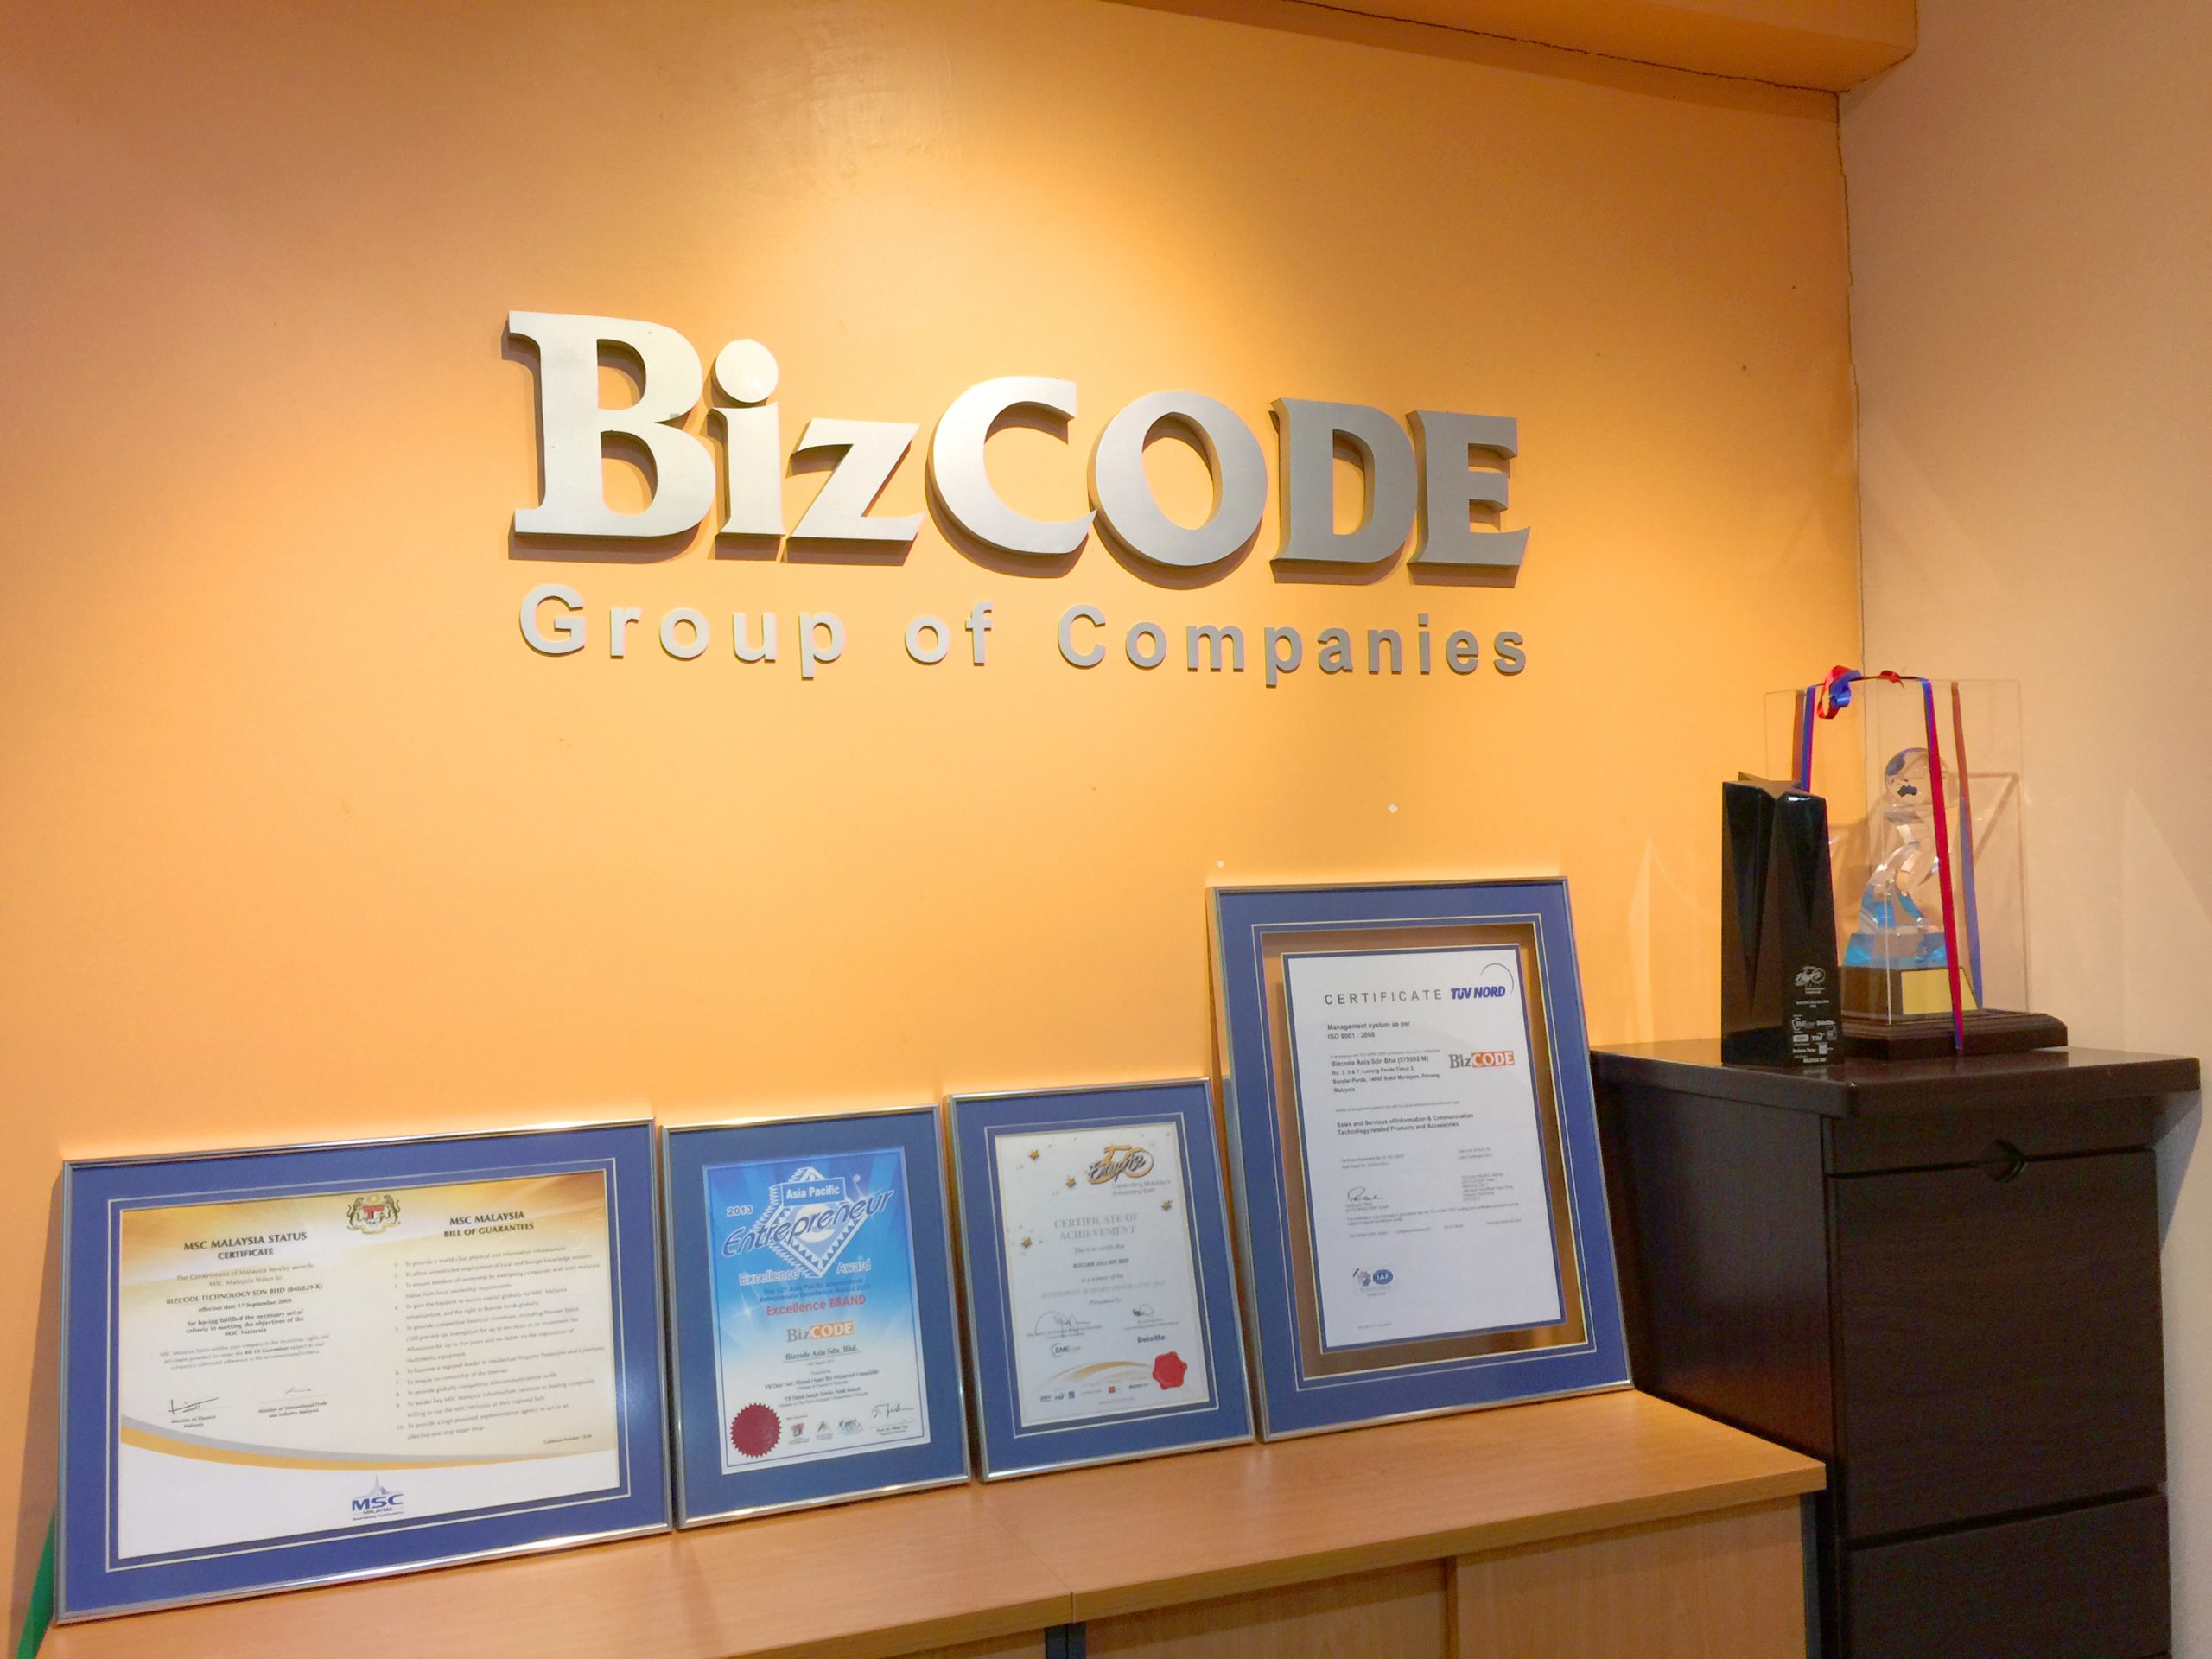 Bizcode集團榮獲多項企業榮譽獎項，表現獲得肯定。